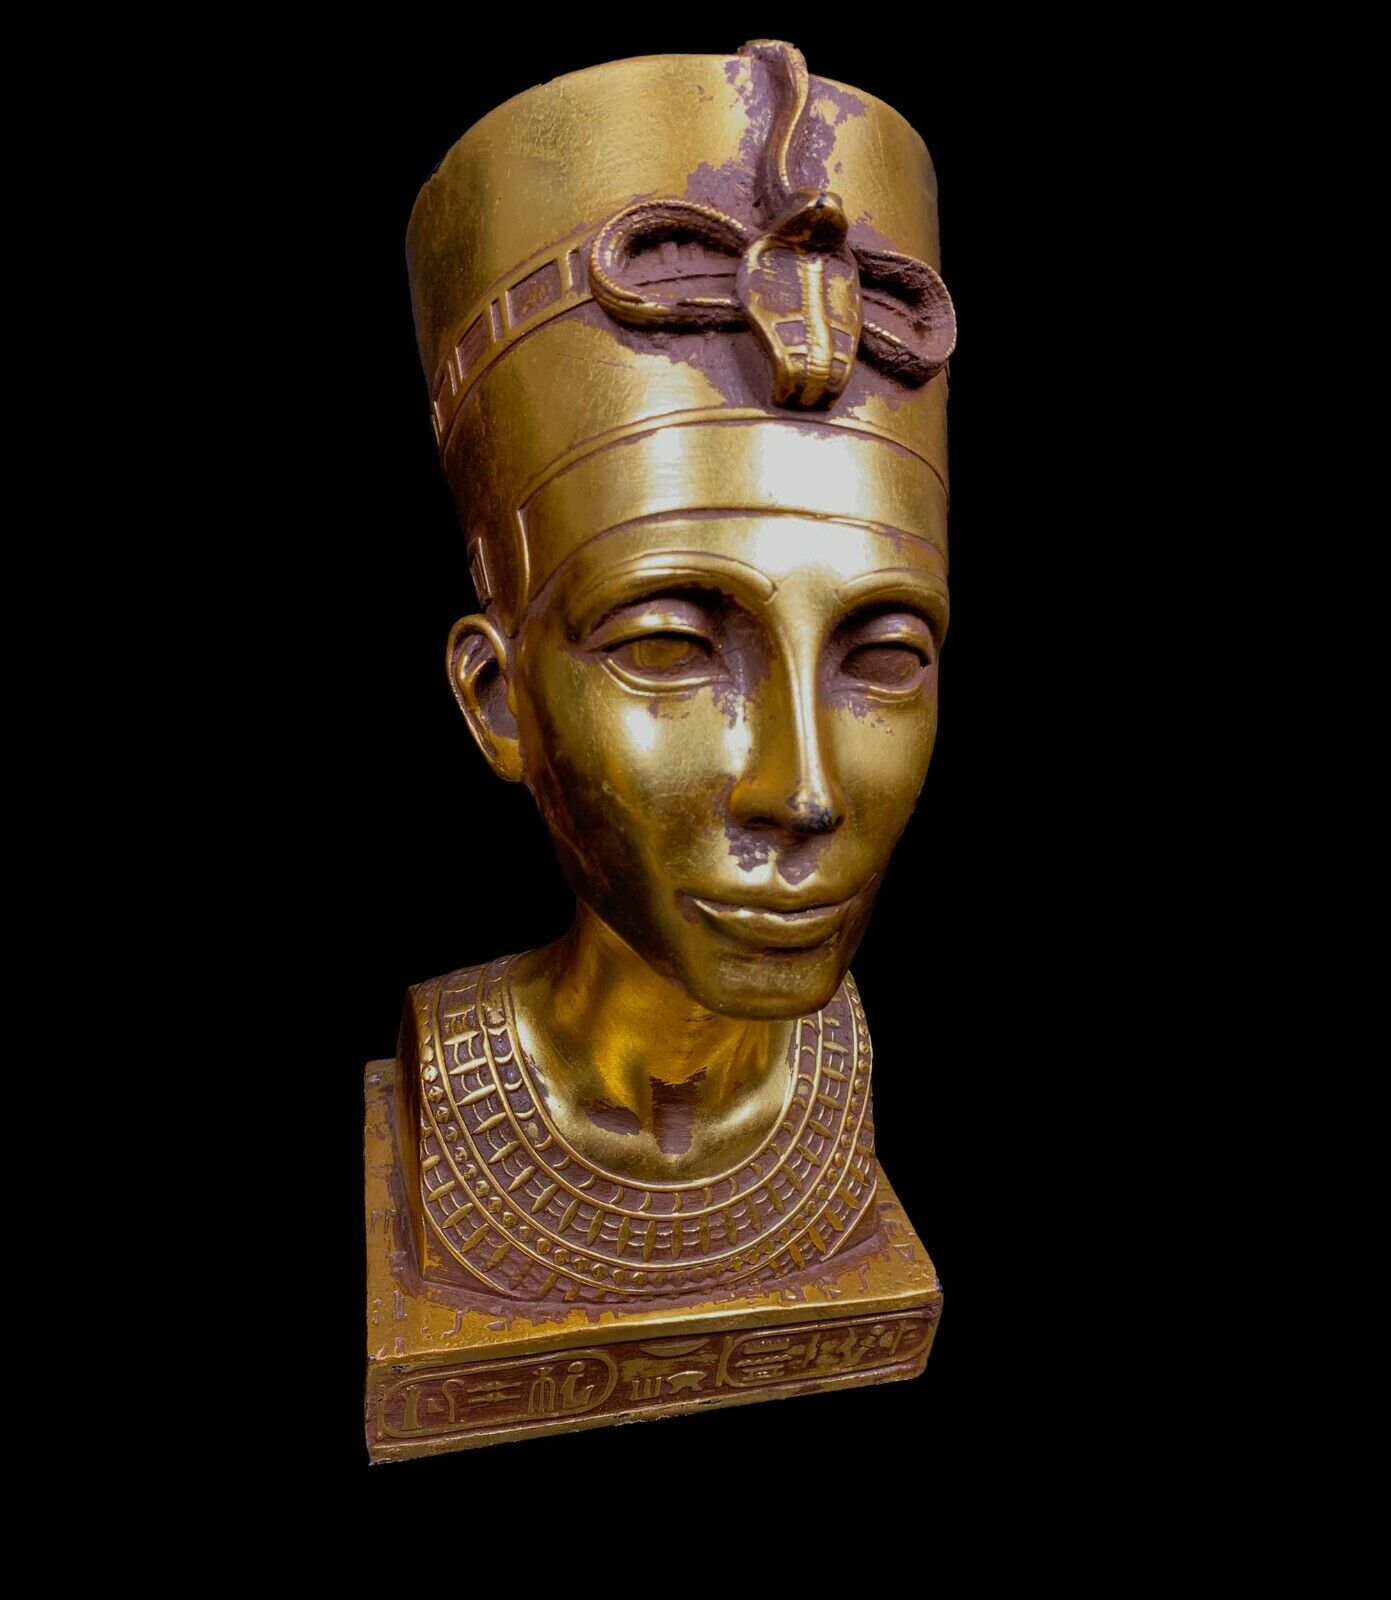 Marvelous Queen NEFERTITI The Beautiful Queen of Egypt